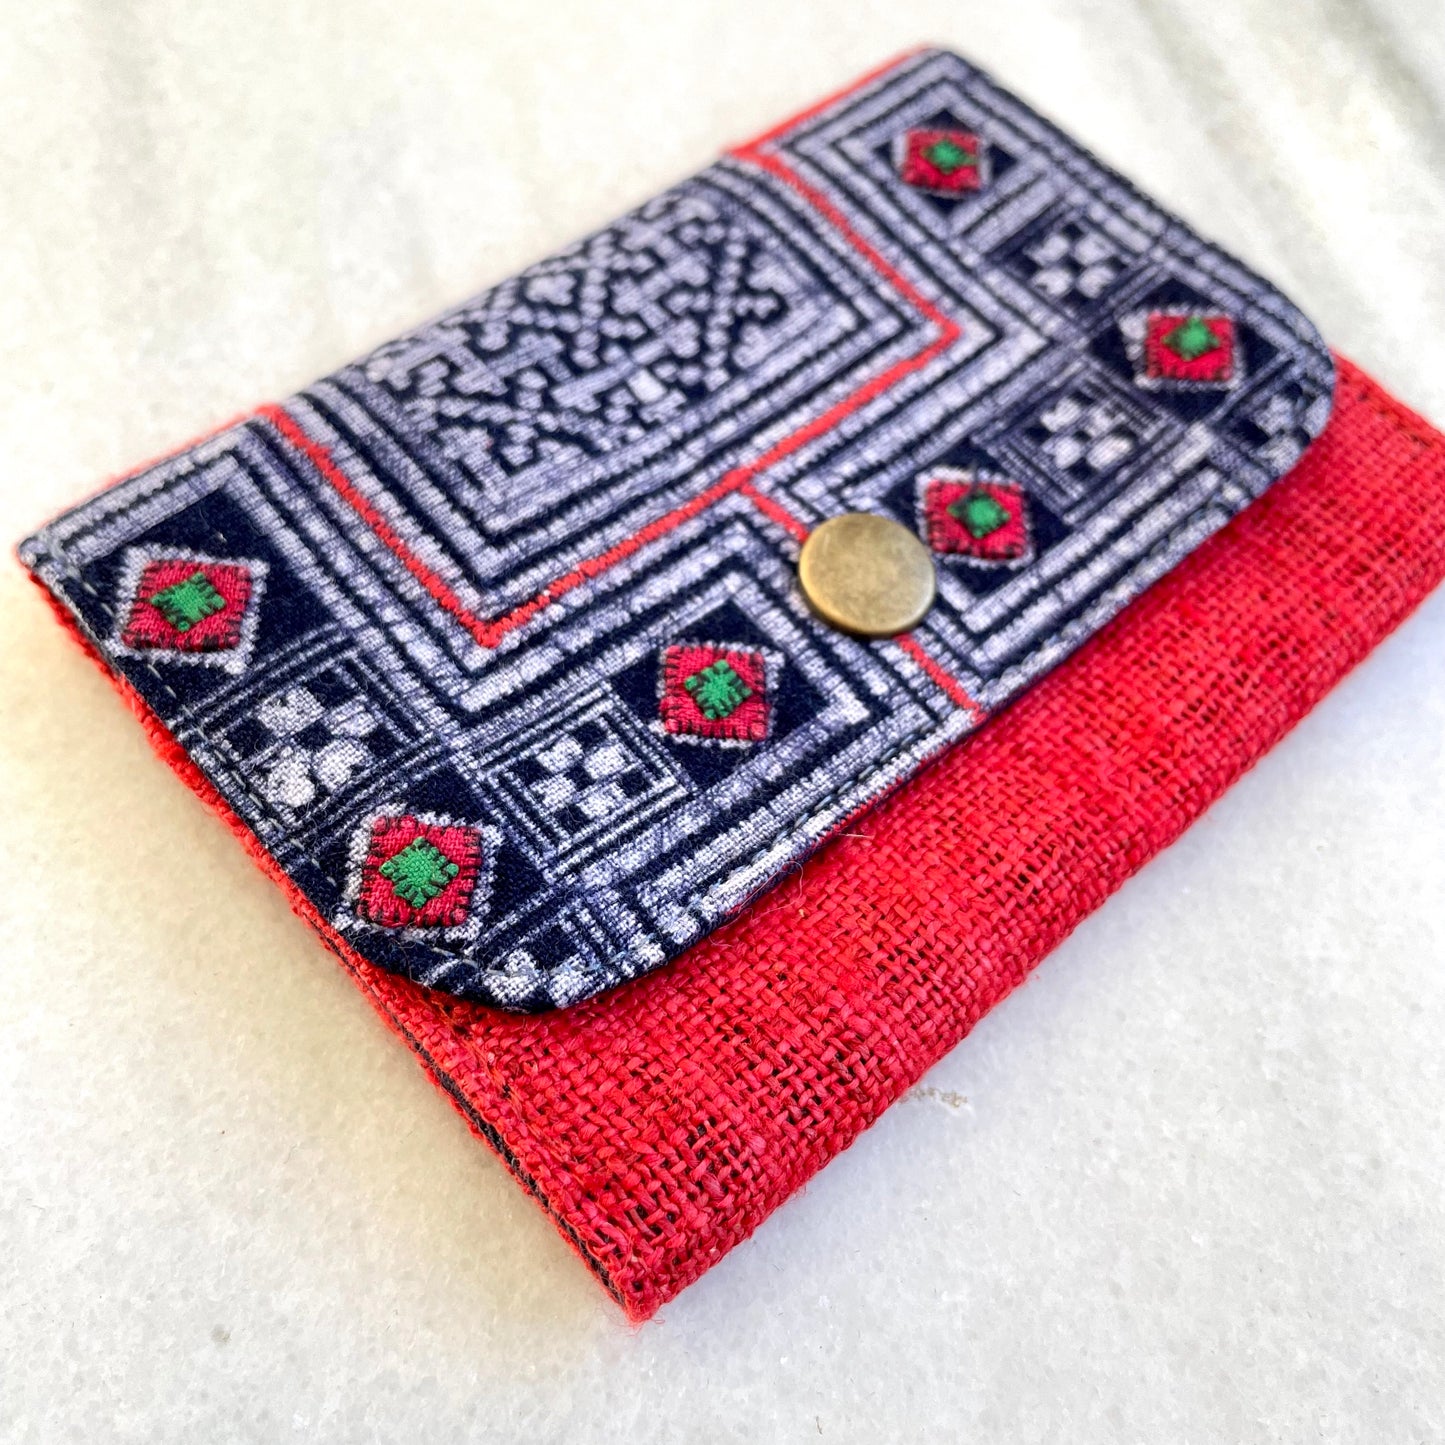 Red Hemp card holder, Indigo Batik fabric